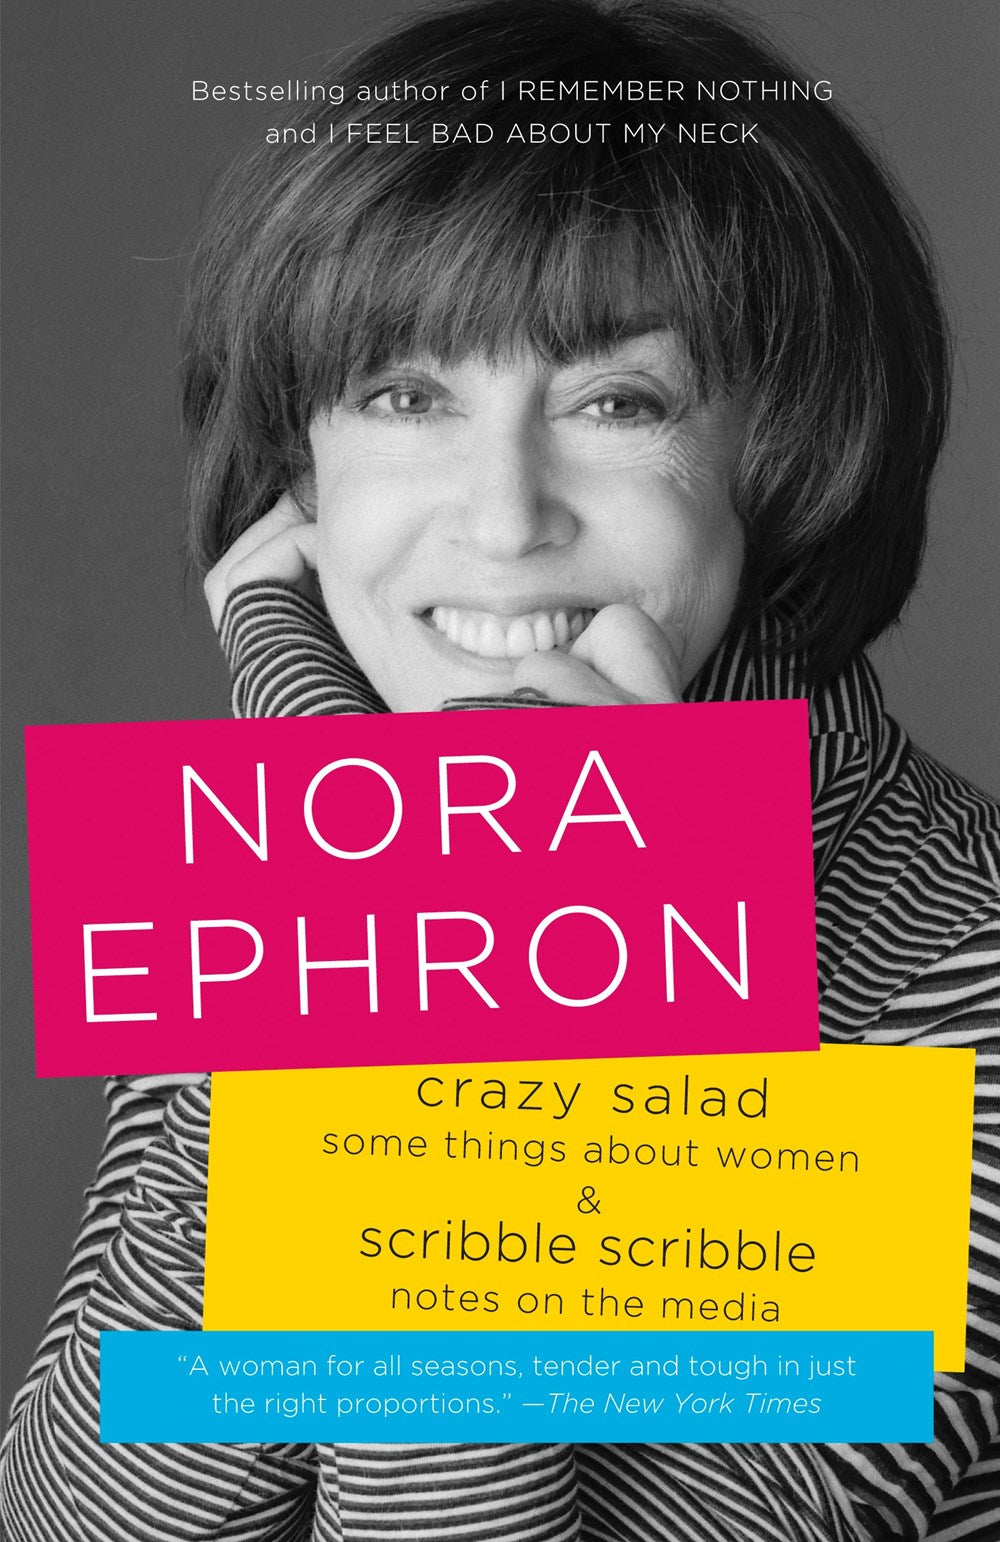 Crazy Salad & Scribble Scribble by Nora Ephron